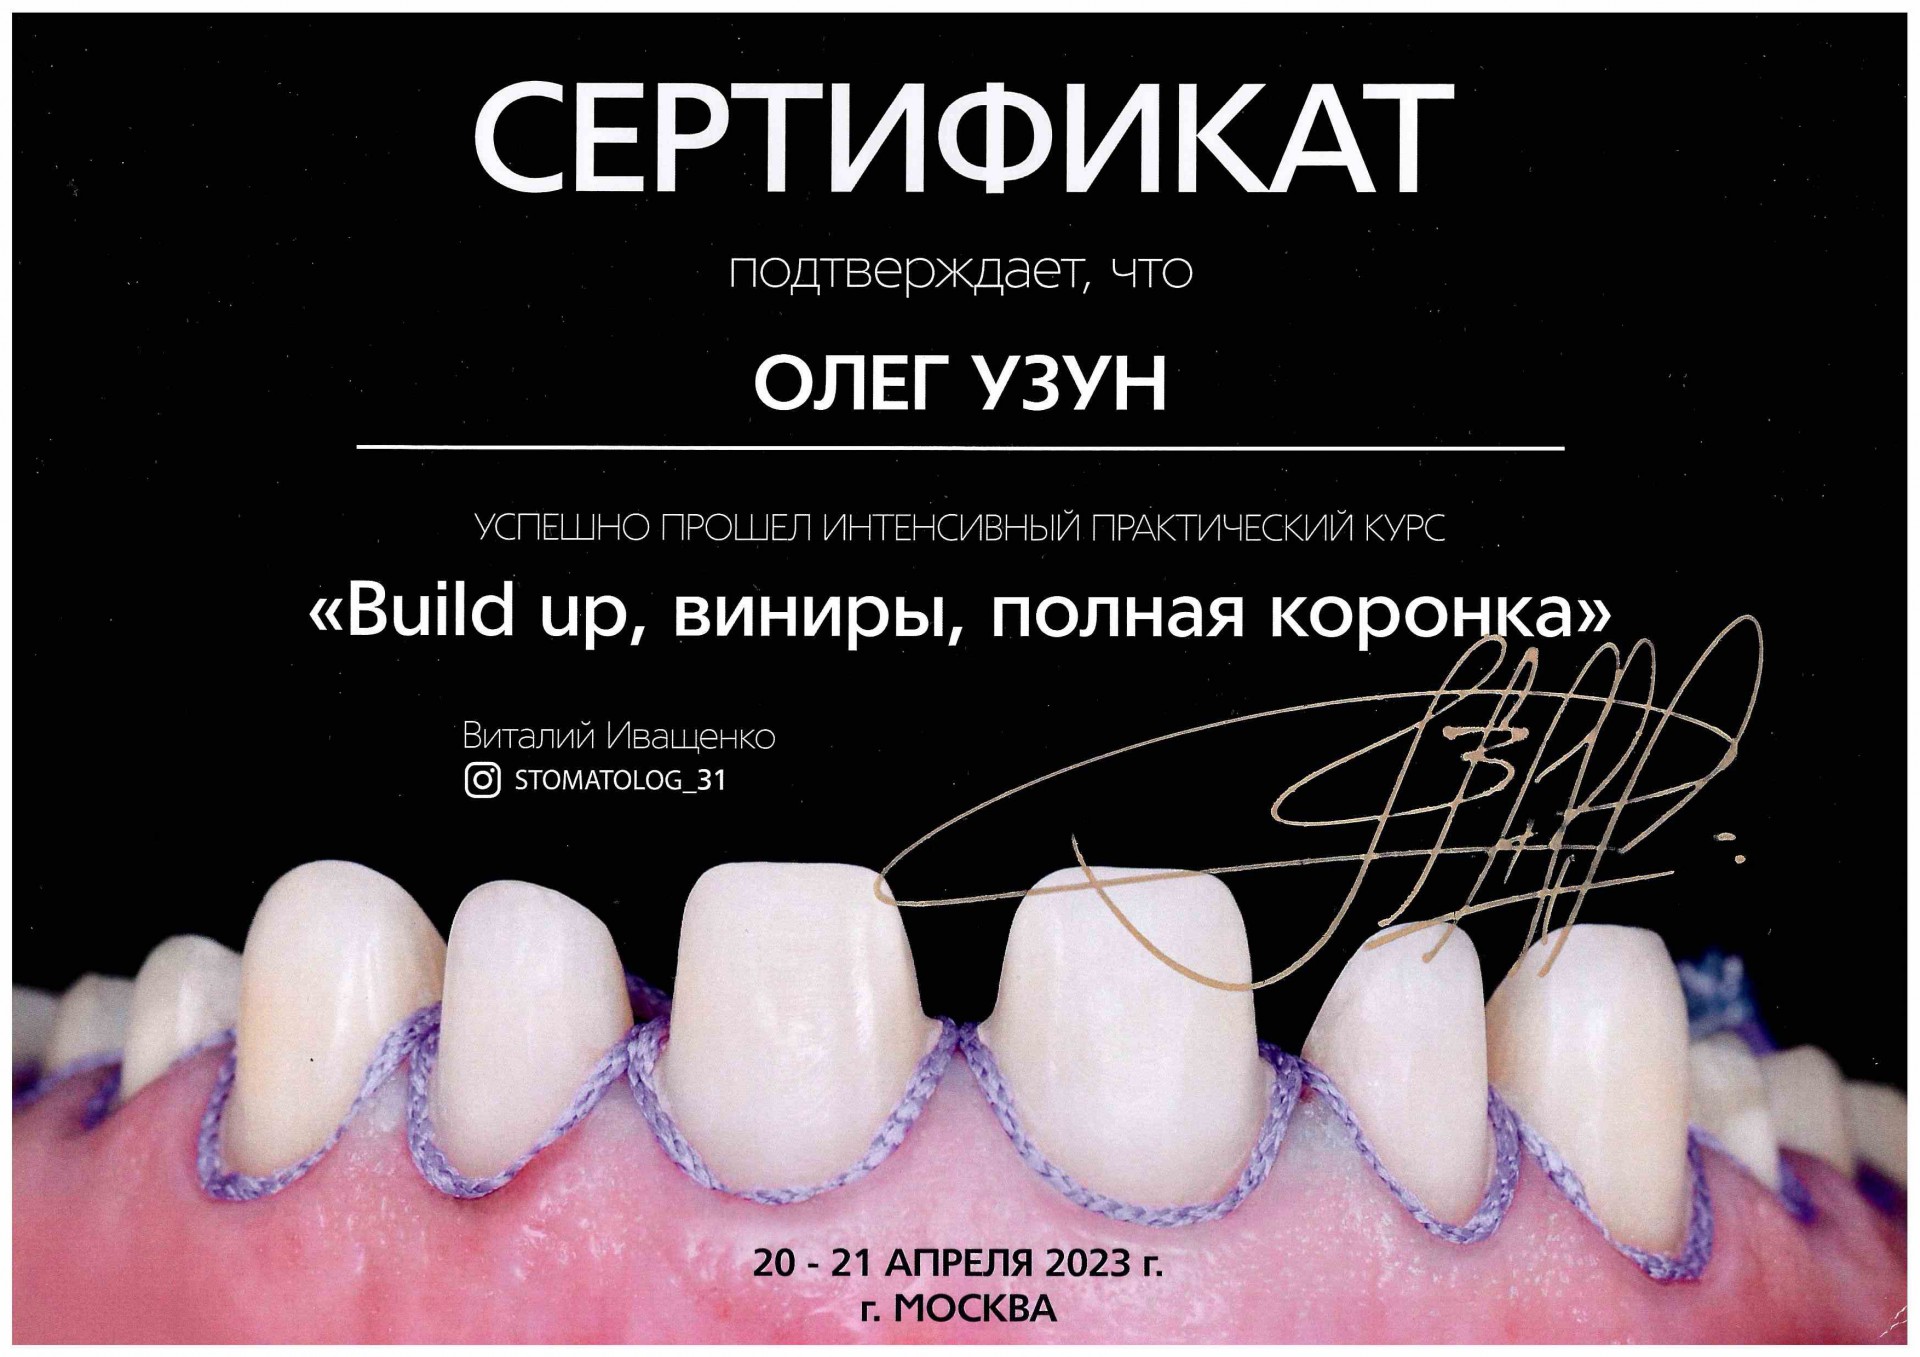 Oleg Uzun dentistorthopedic